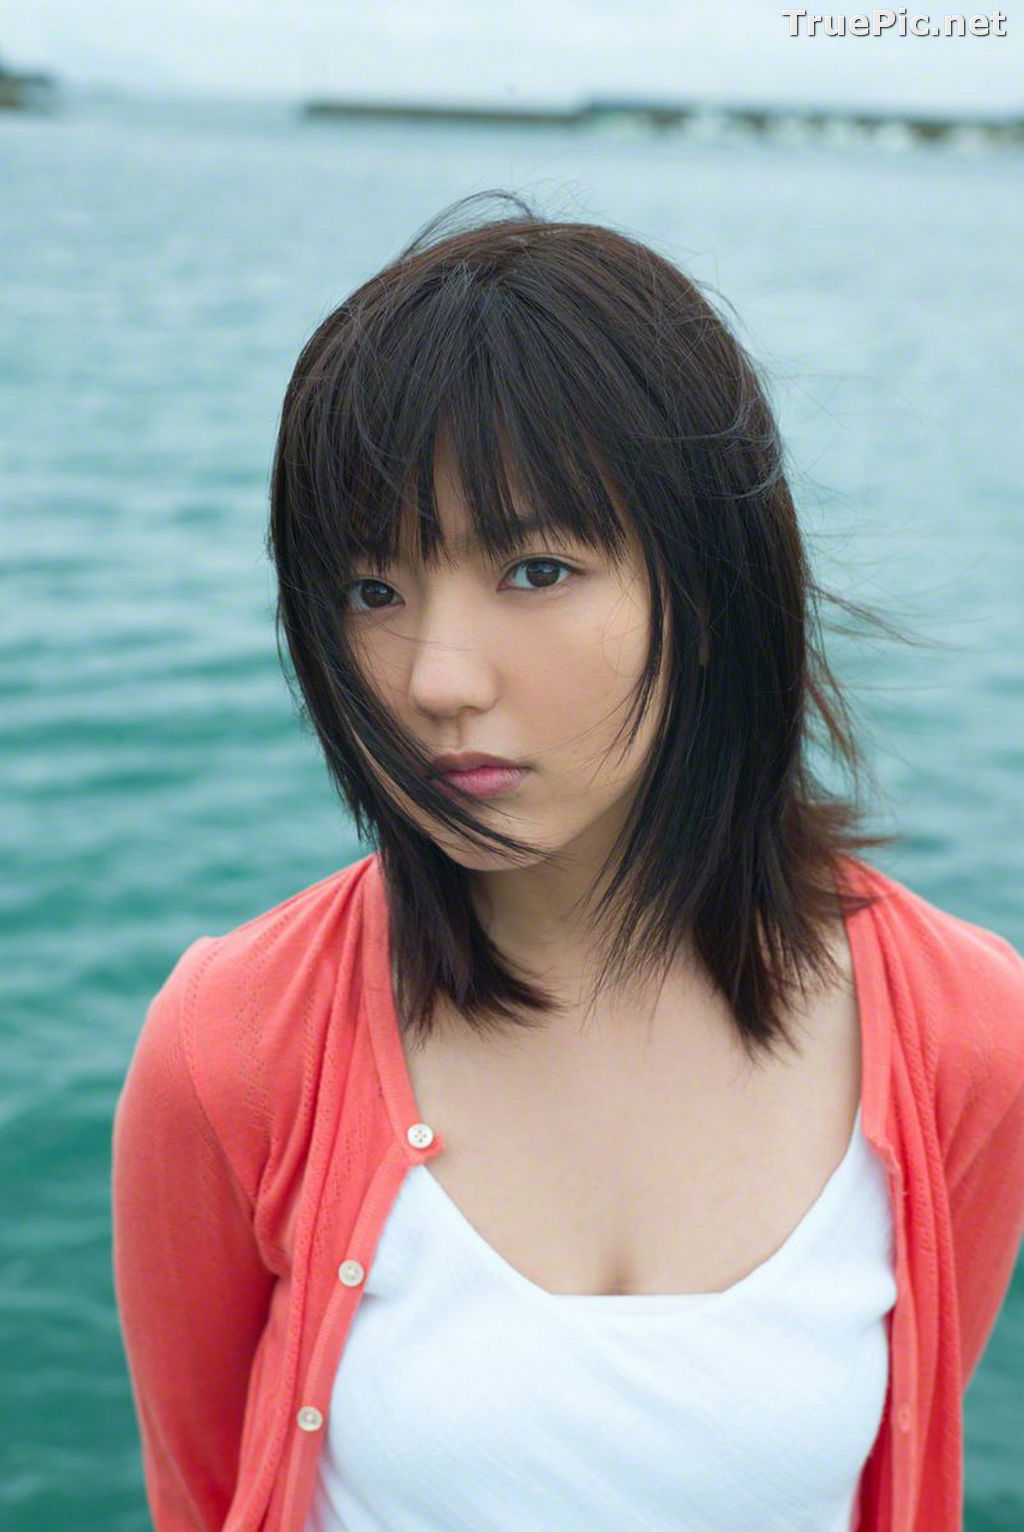 Image Wanibooks No.130 - Japanese Idol Singer and Actress - Erina Mano - TruePic.net - Picture-193